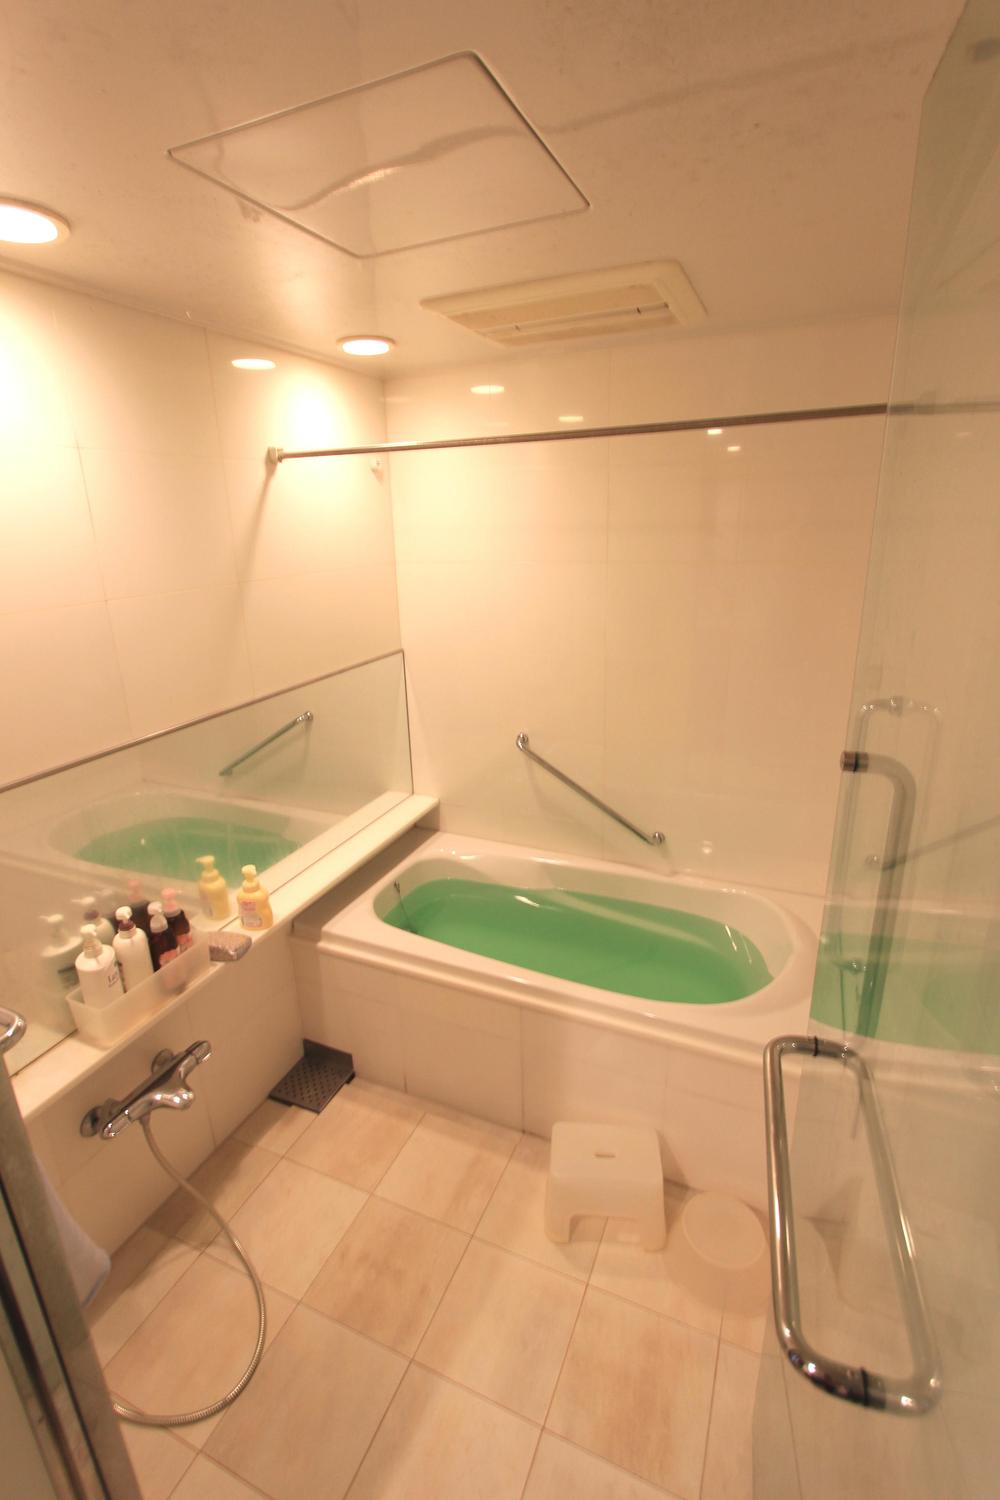 Bathroom. 1620 full Otobasu system adoption of size